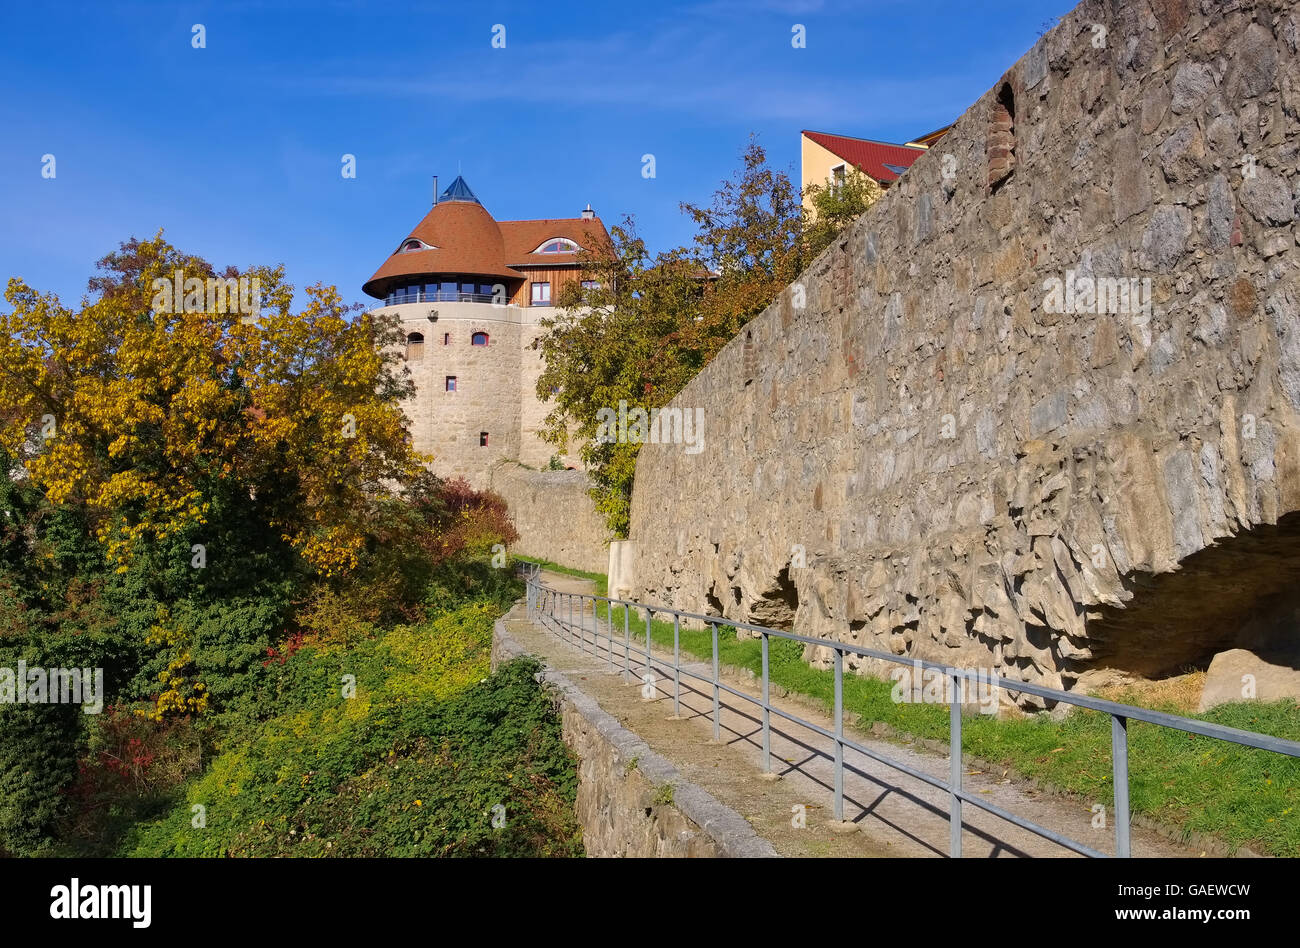 Bautzen Stadtmauer in der Oberlausitz - town wall in Bautzen, Upper Lusatia in Germany Stock Photo